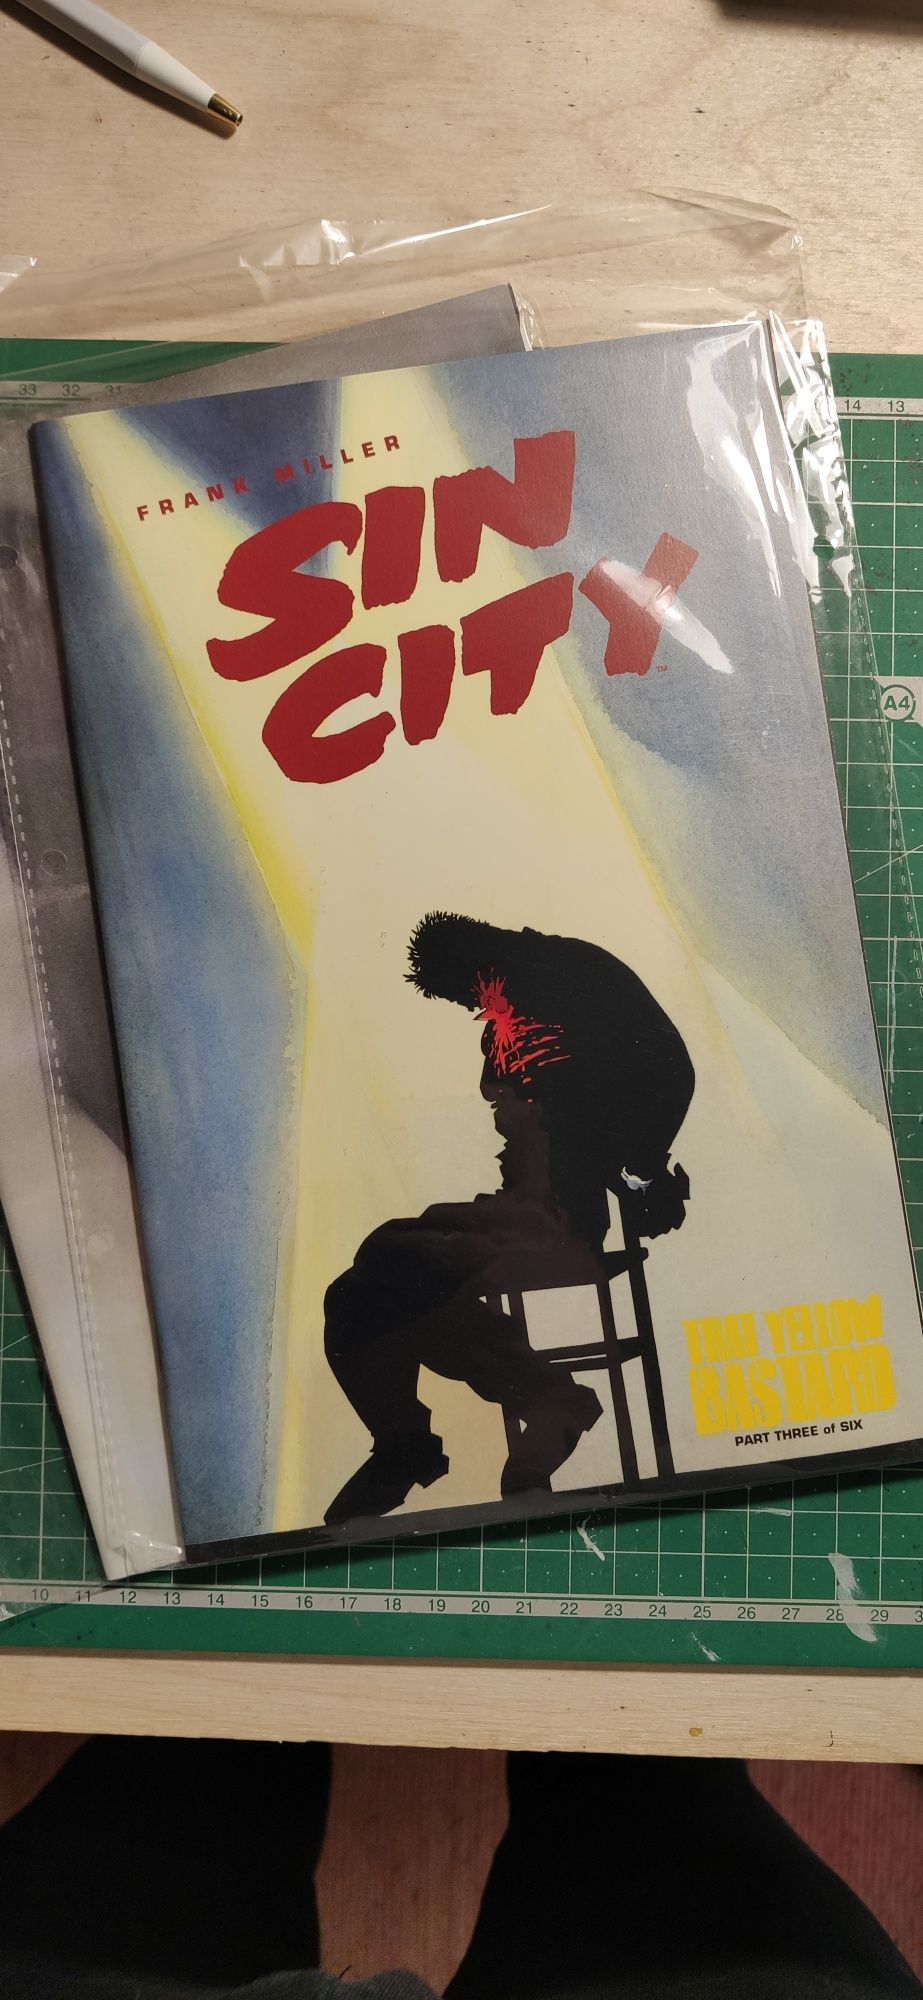 Sin city - That Yellow Bastard